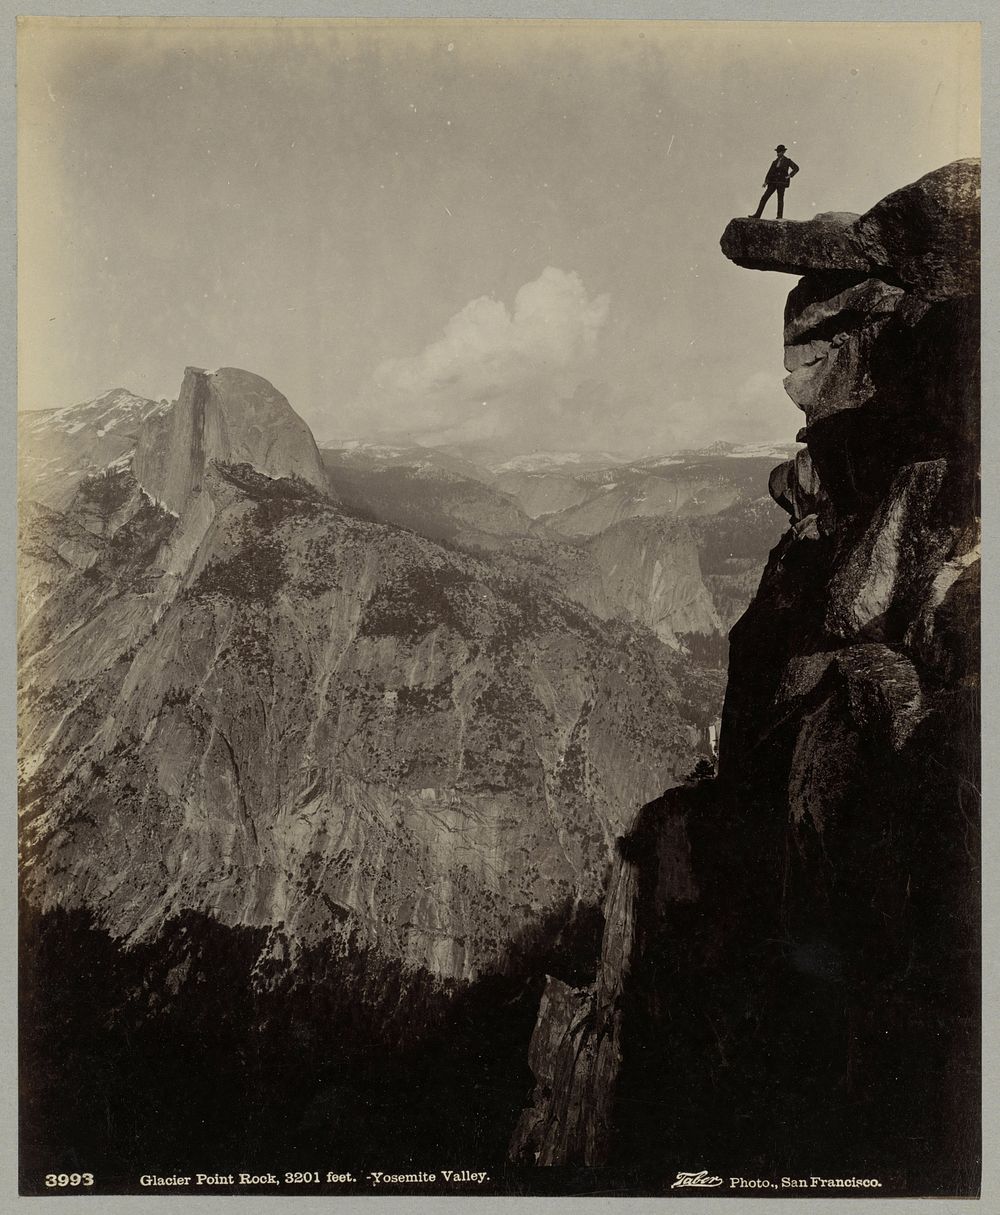 Man op Glacier Point Rock in Yosemite Valley (c. 1880 - c. 1900) by Isaiah West Taber